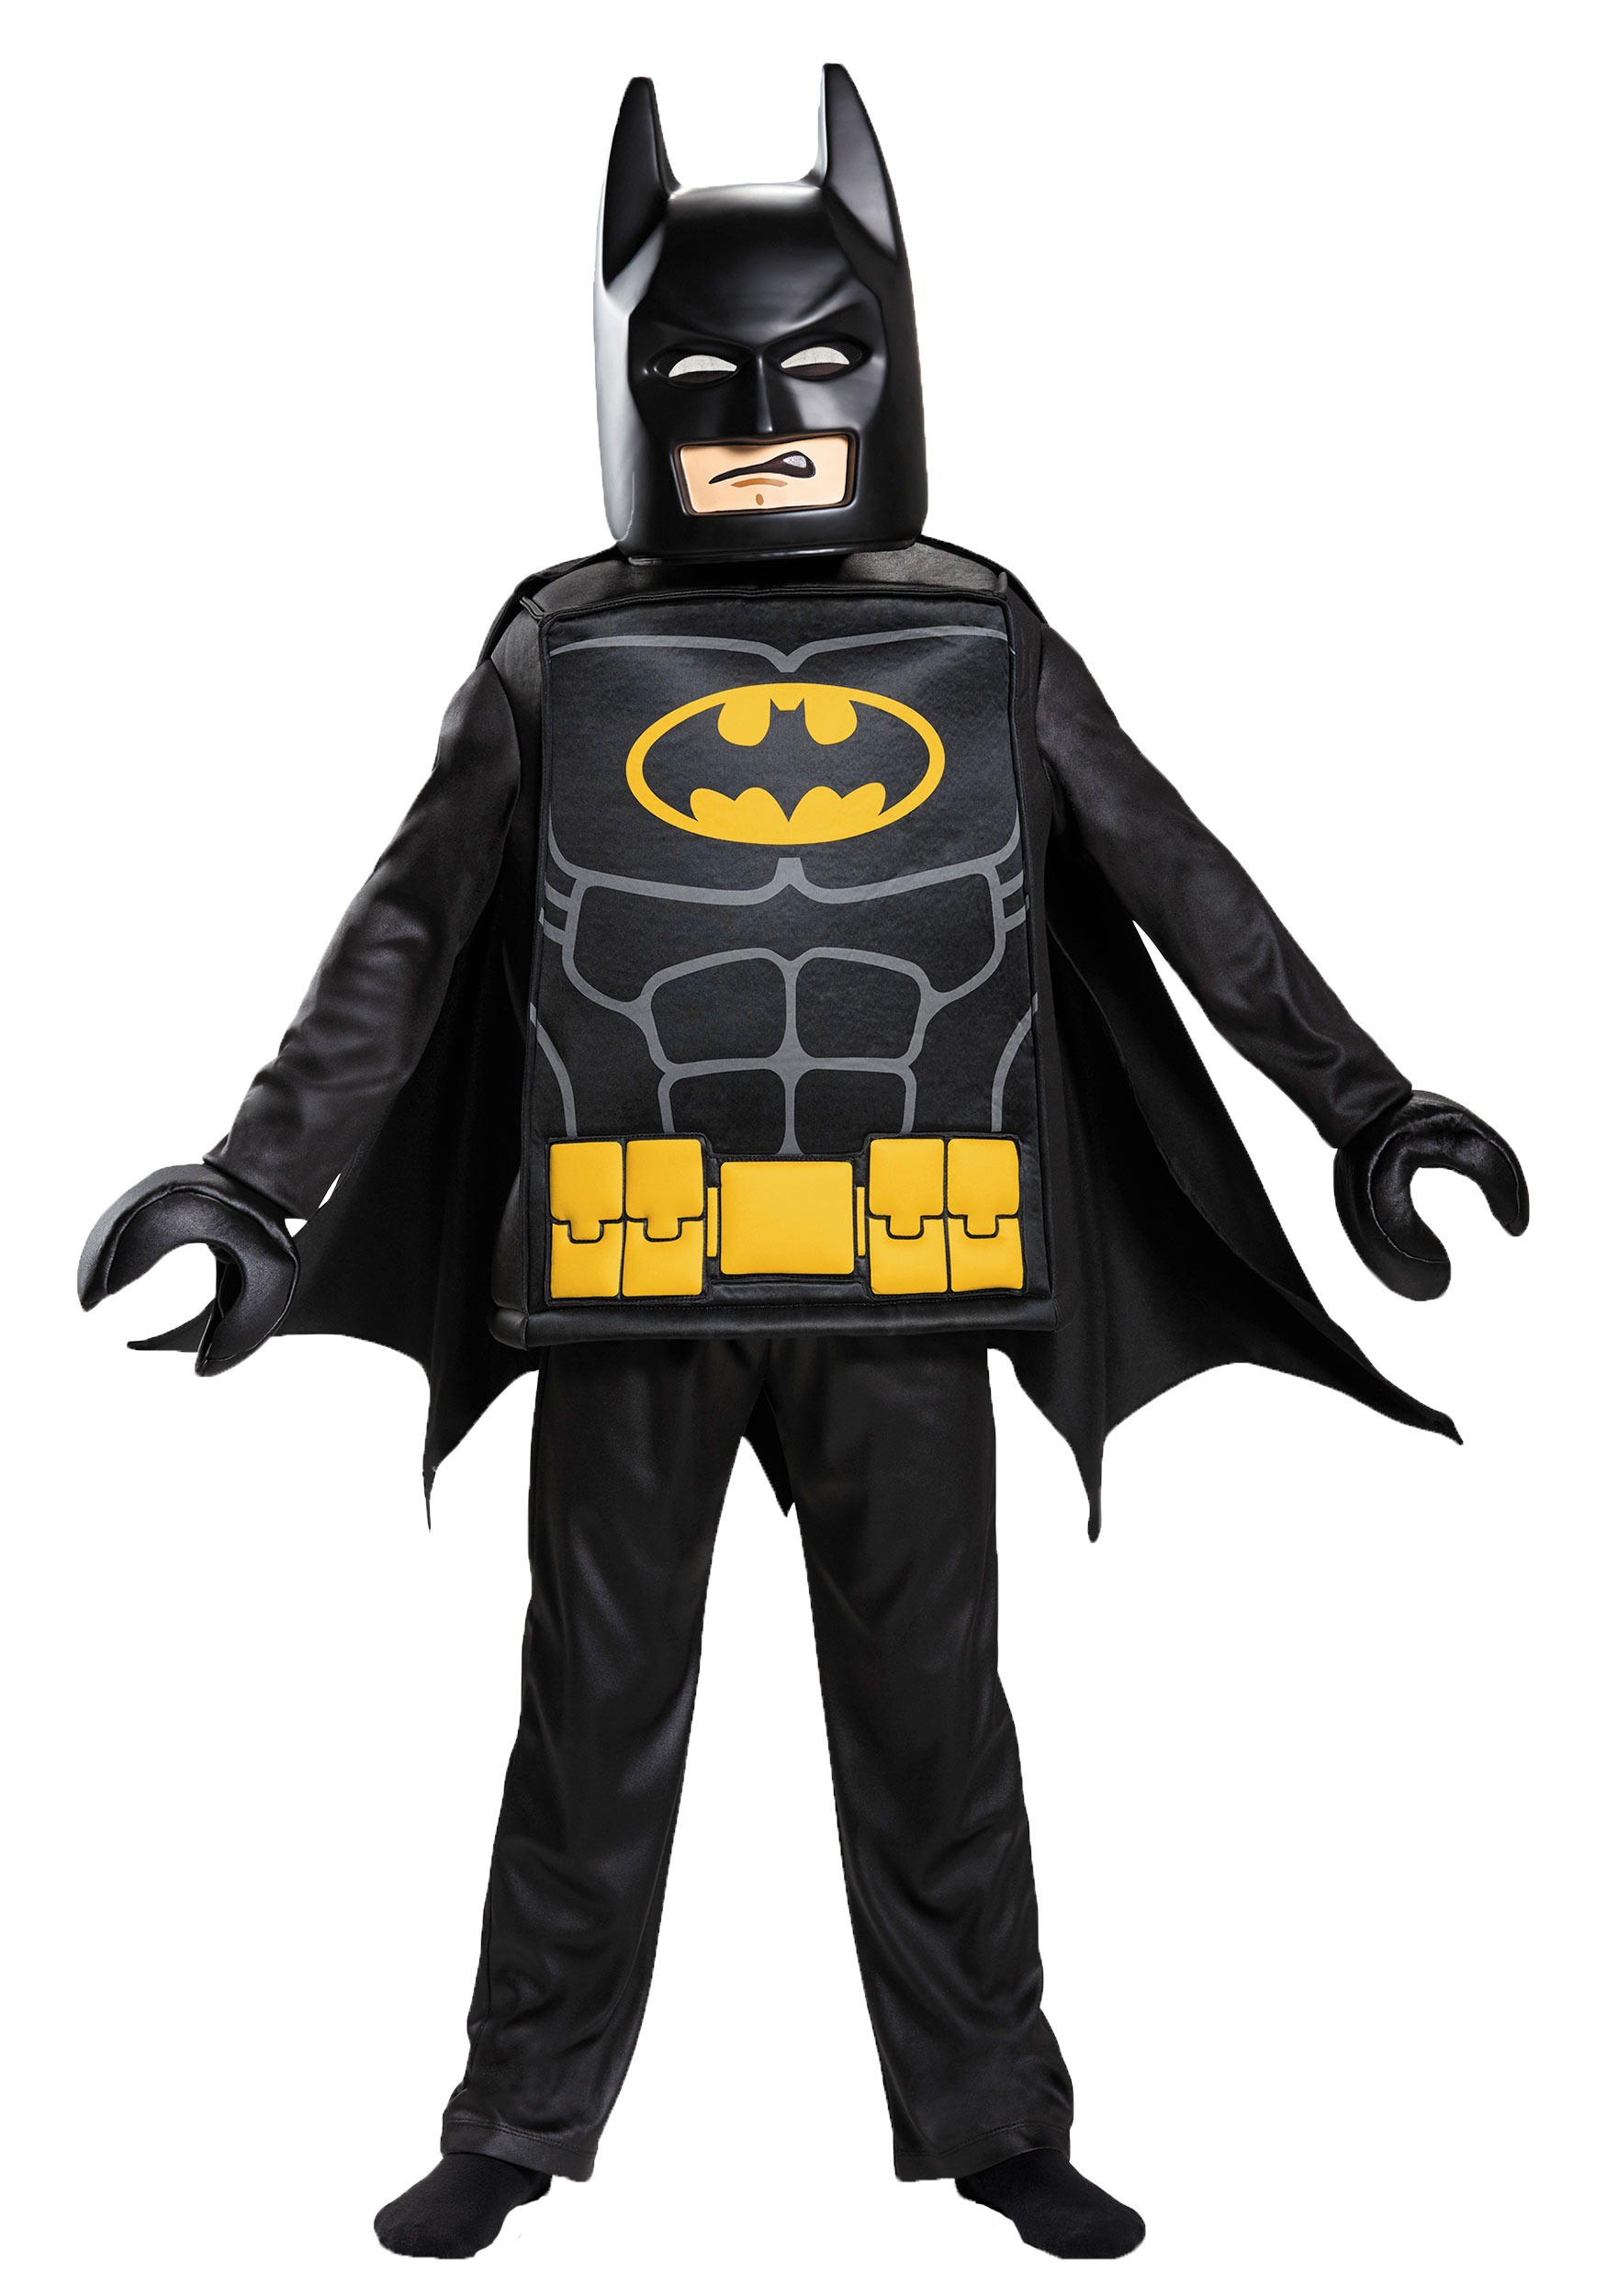 Batman Costume for Boys Lego Batman